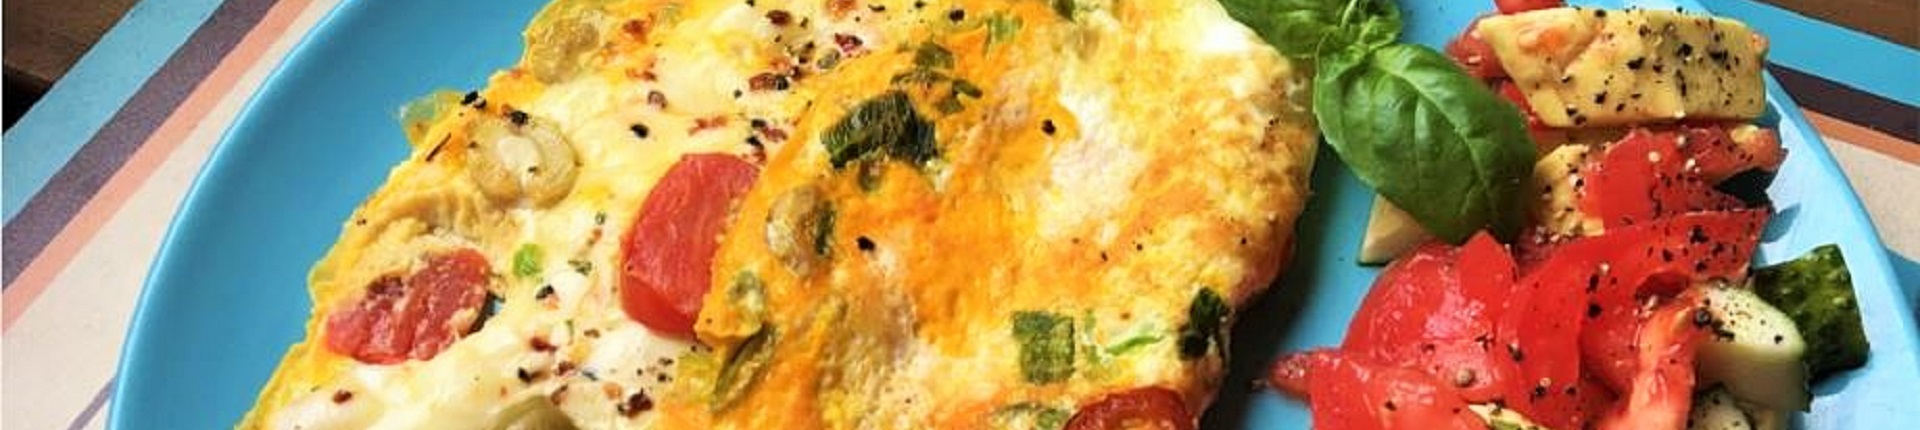 Omlet z mozzarellą i oliwkami  